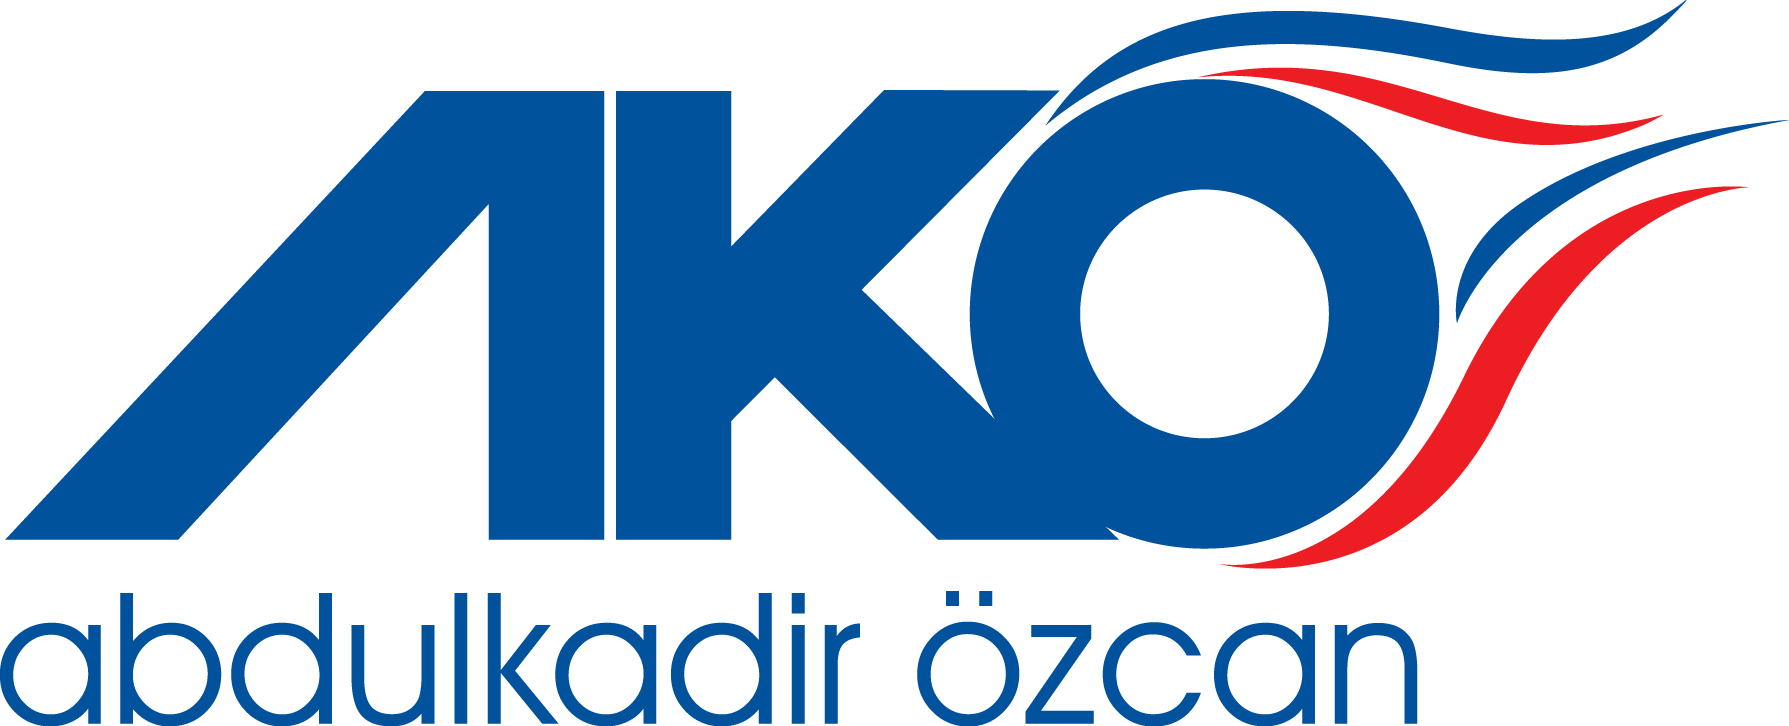 Abdulkadir Özcan Logo [AKO] png